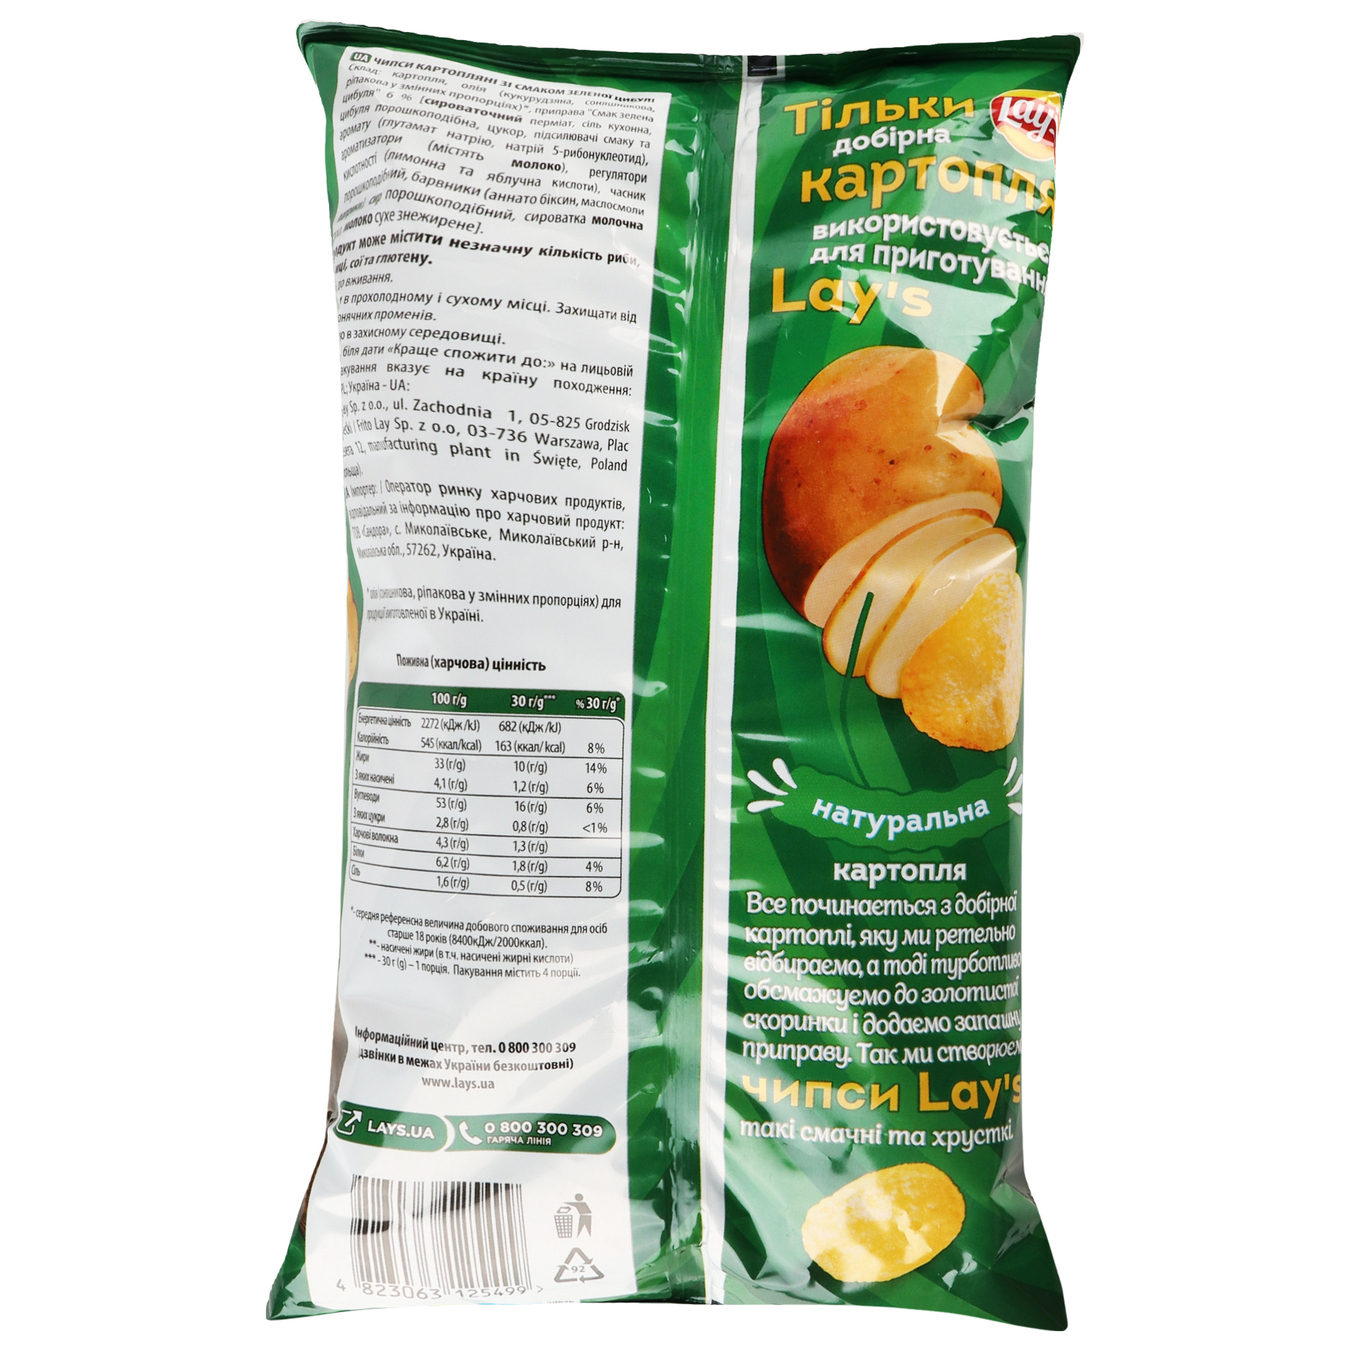 Potato chips Lay's green onion taste 120g 2